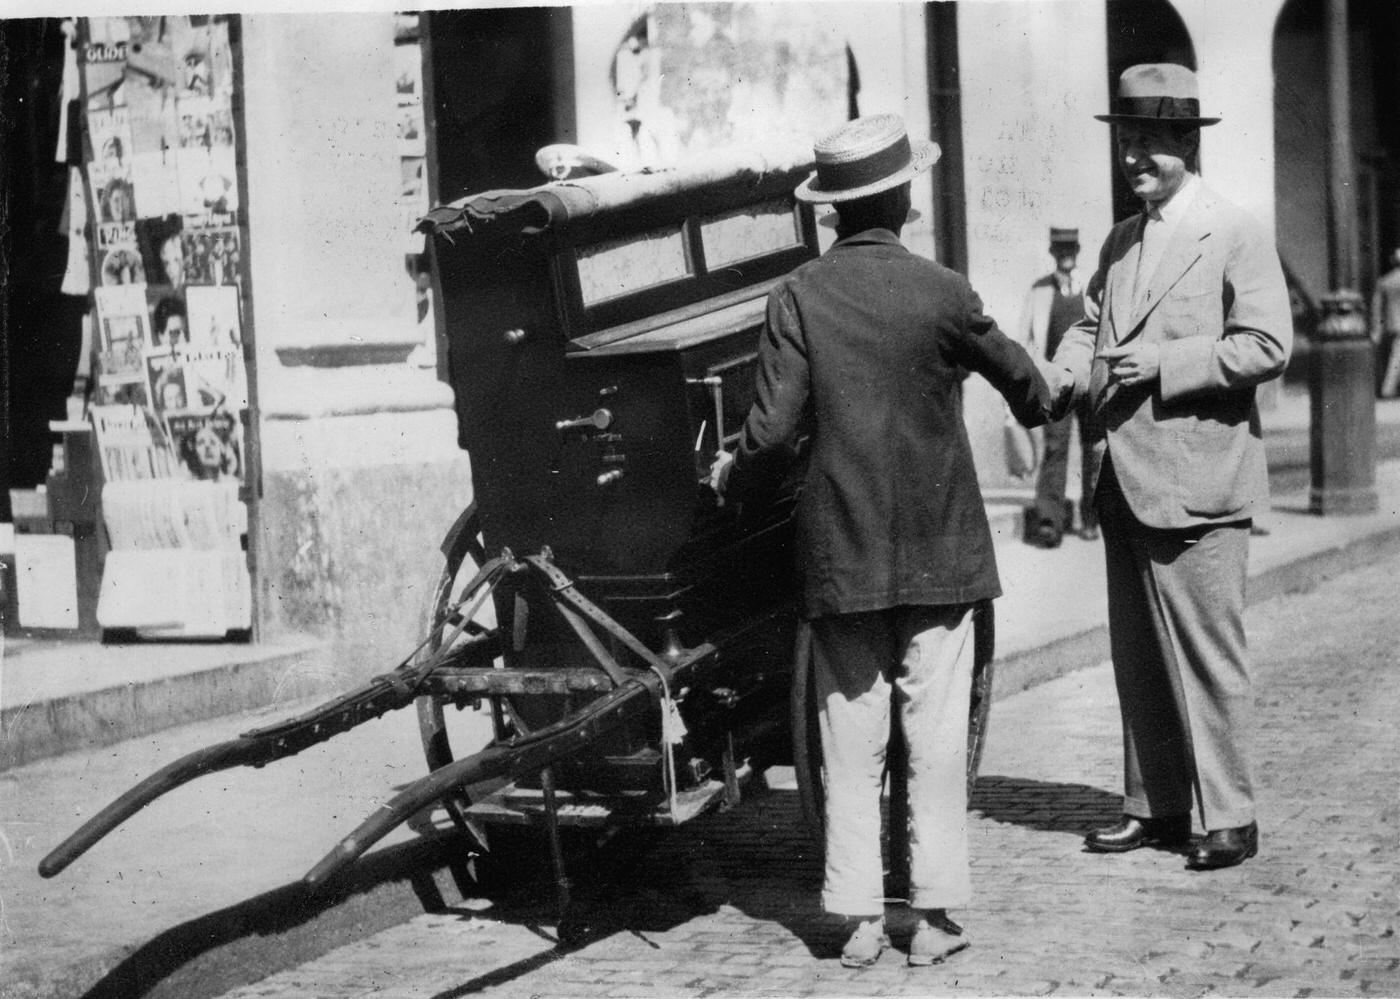 Cognac producer Paul Martell with a street musician in Havana, 1930